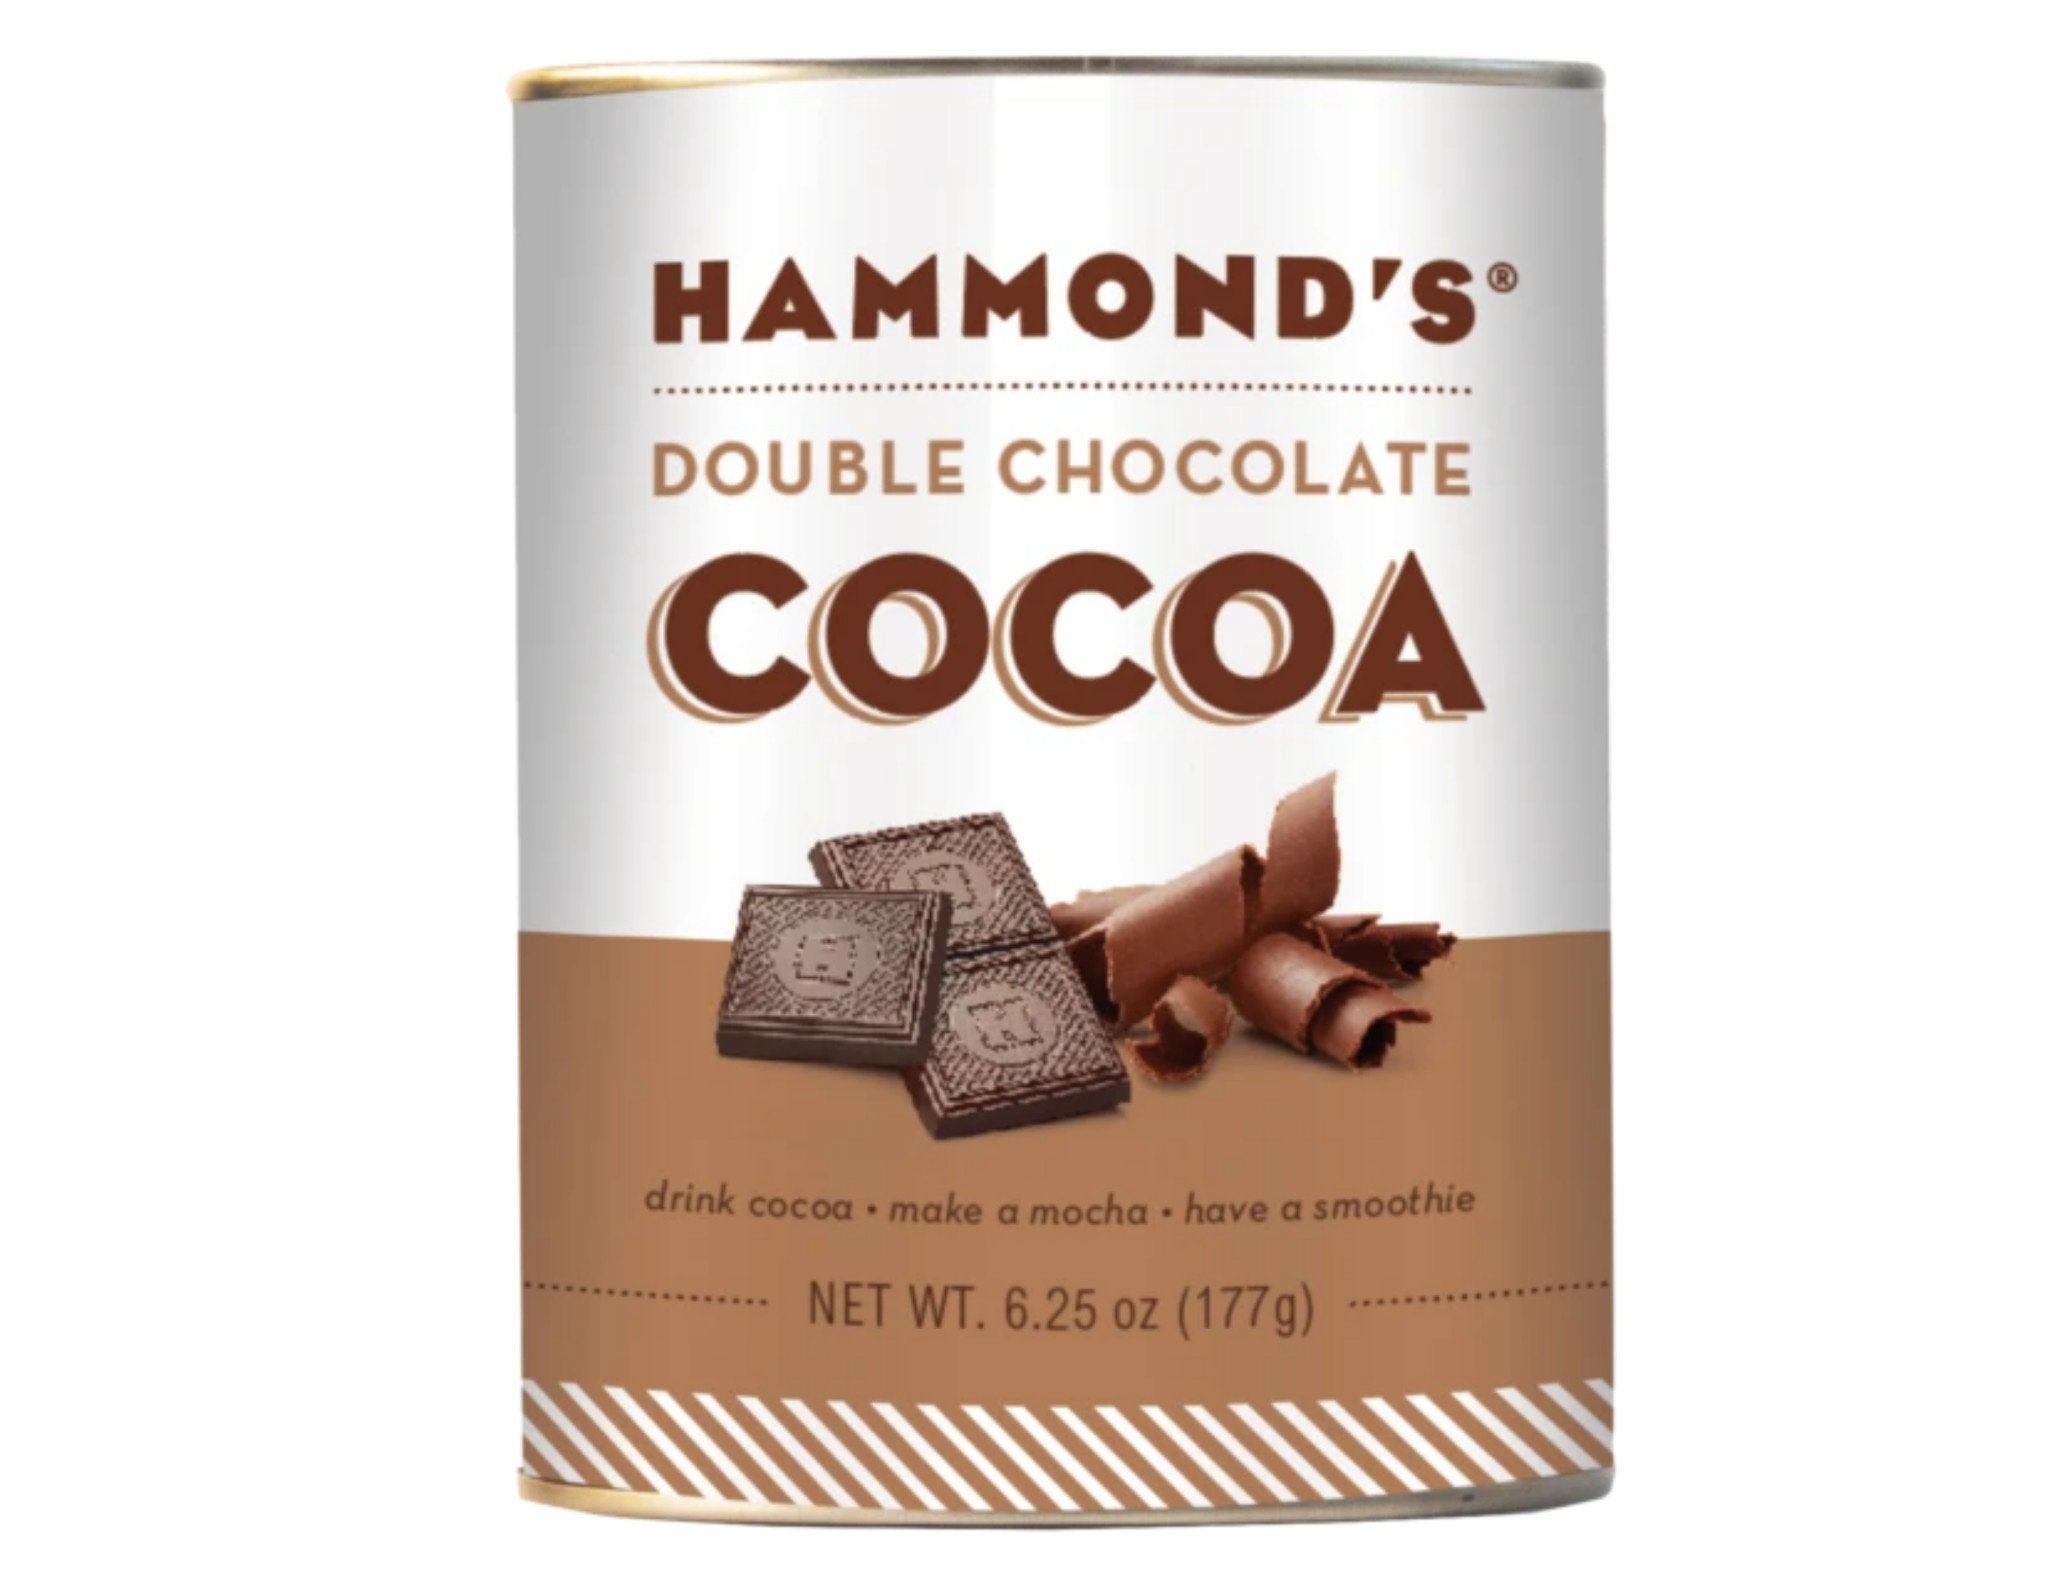 Hammonds Double Chocolate Cocoa Mix